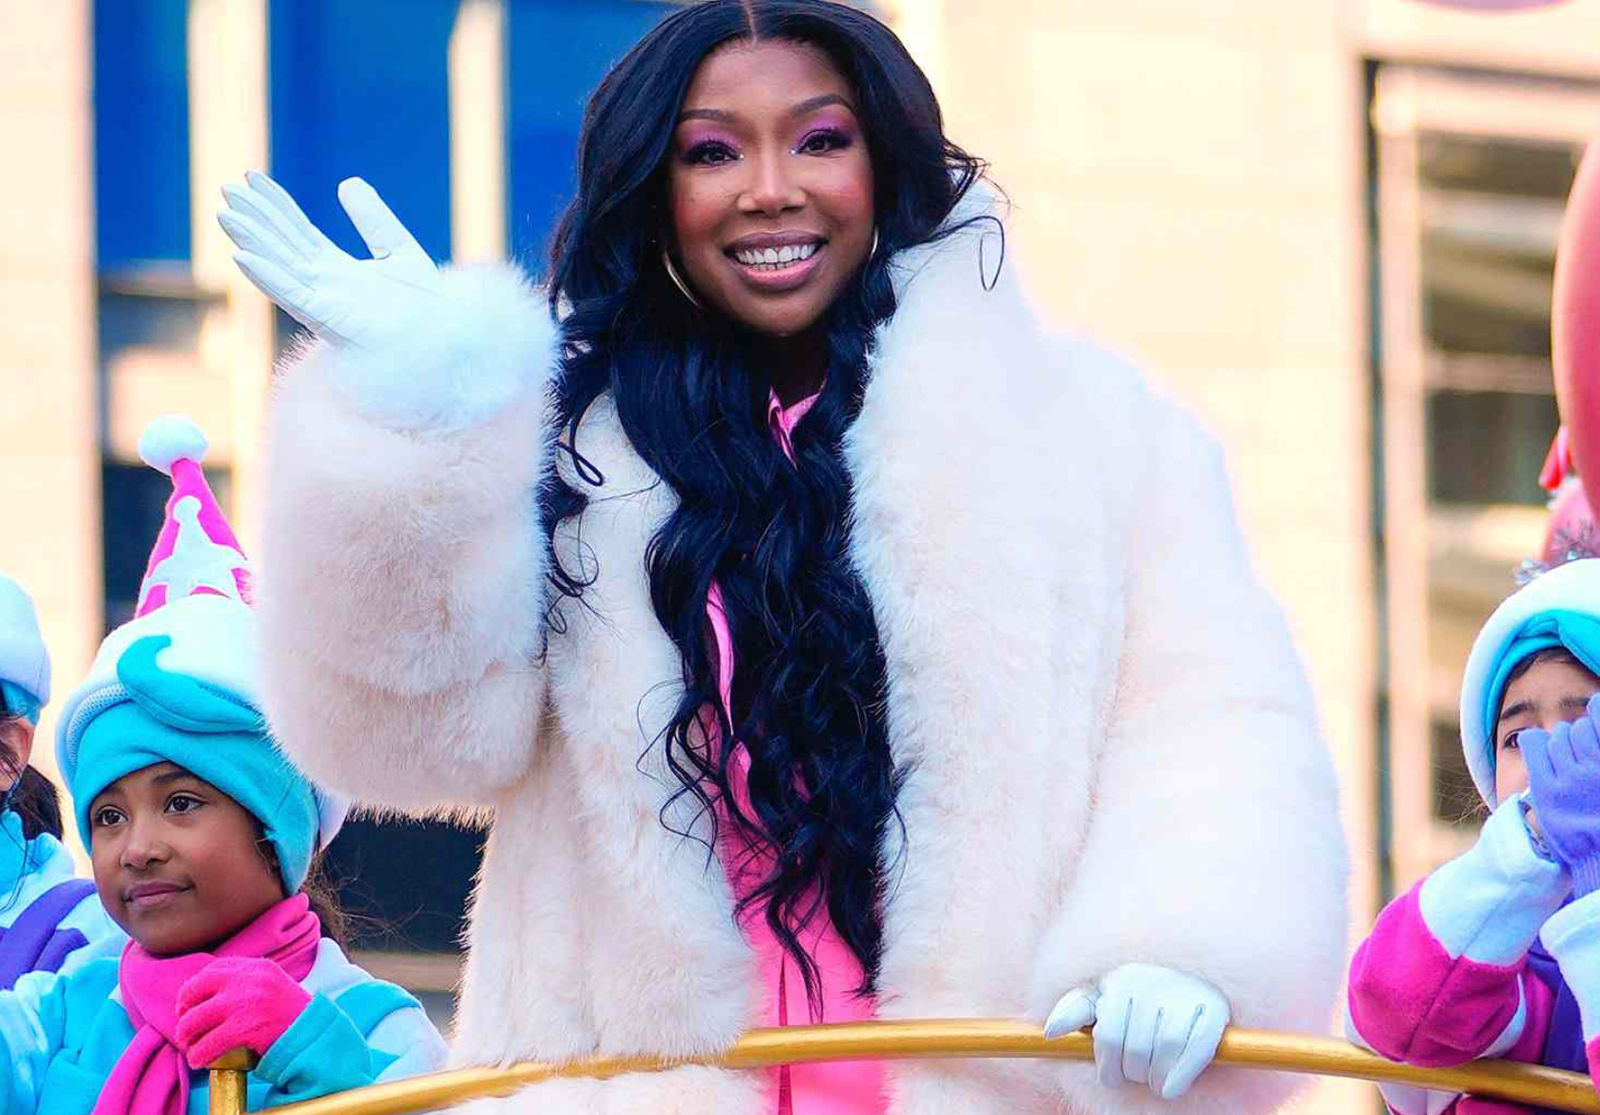 Brandy: The Princess of Christmas at Macy’s Thanksgiving Day Parade